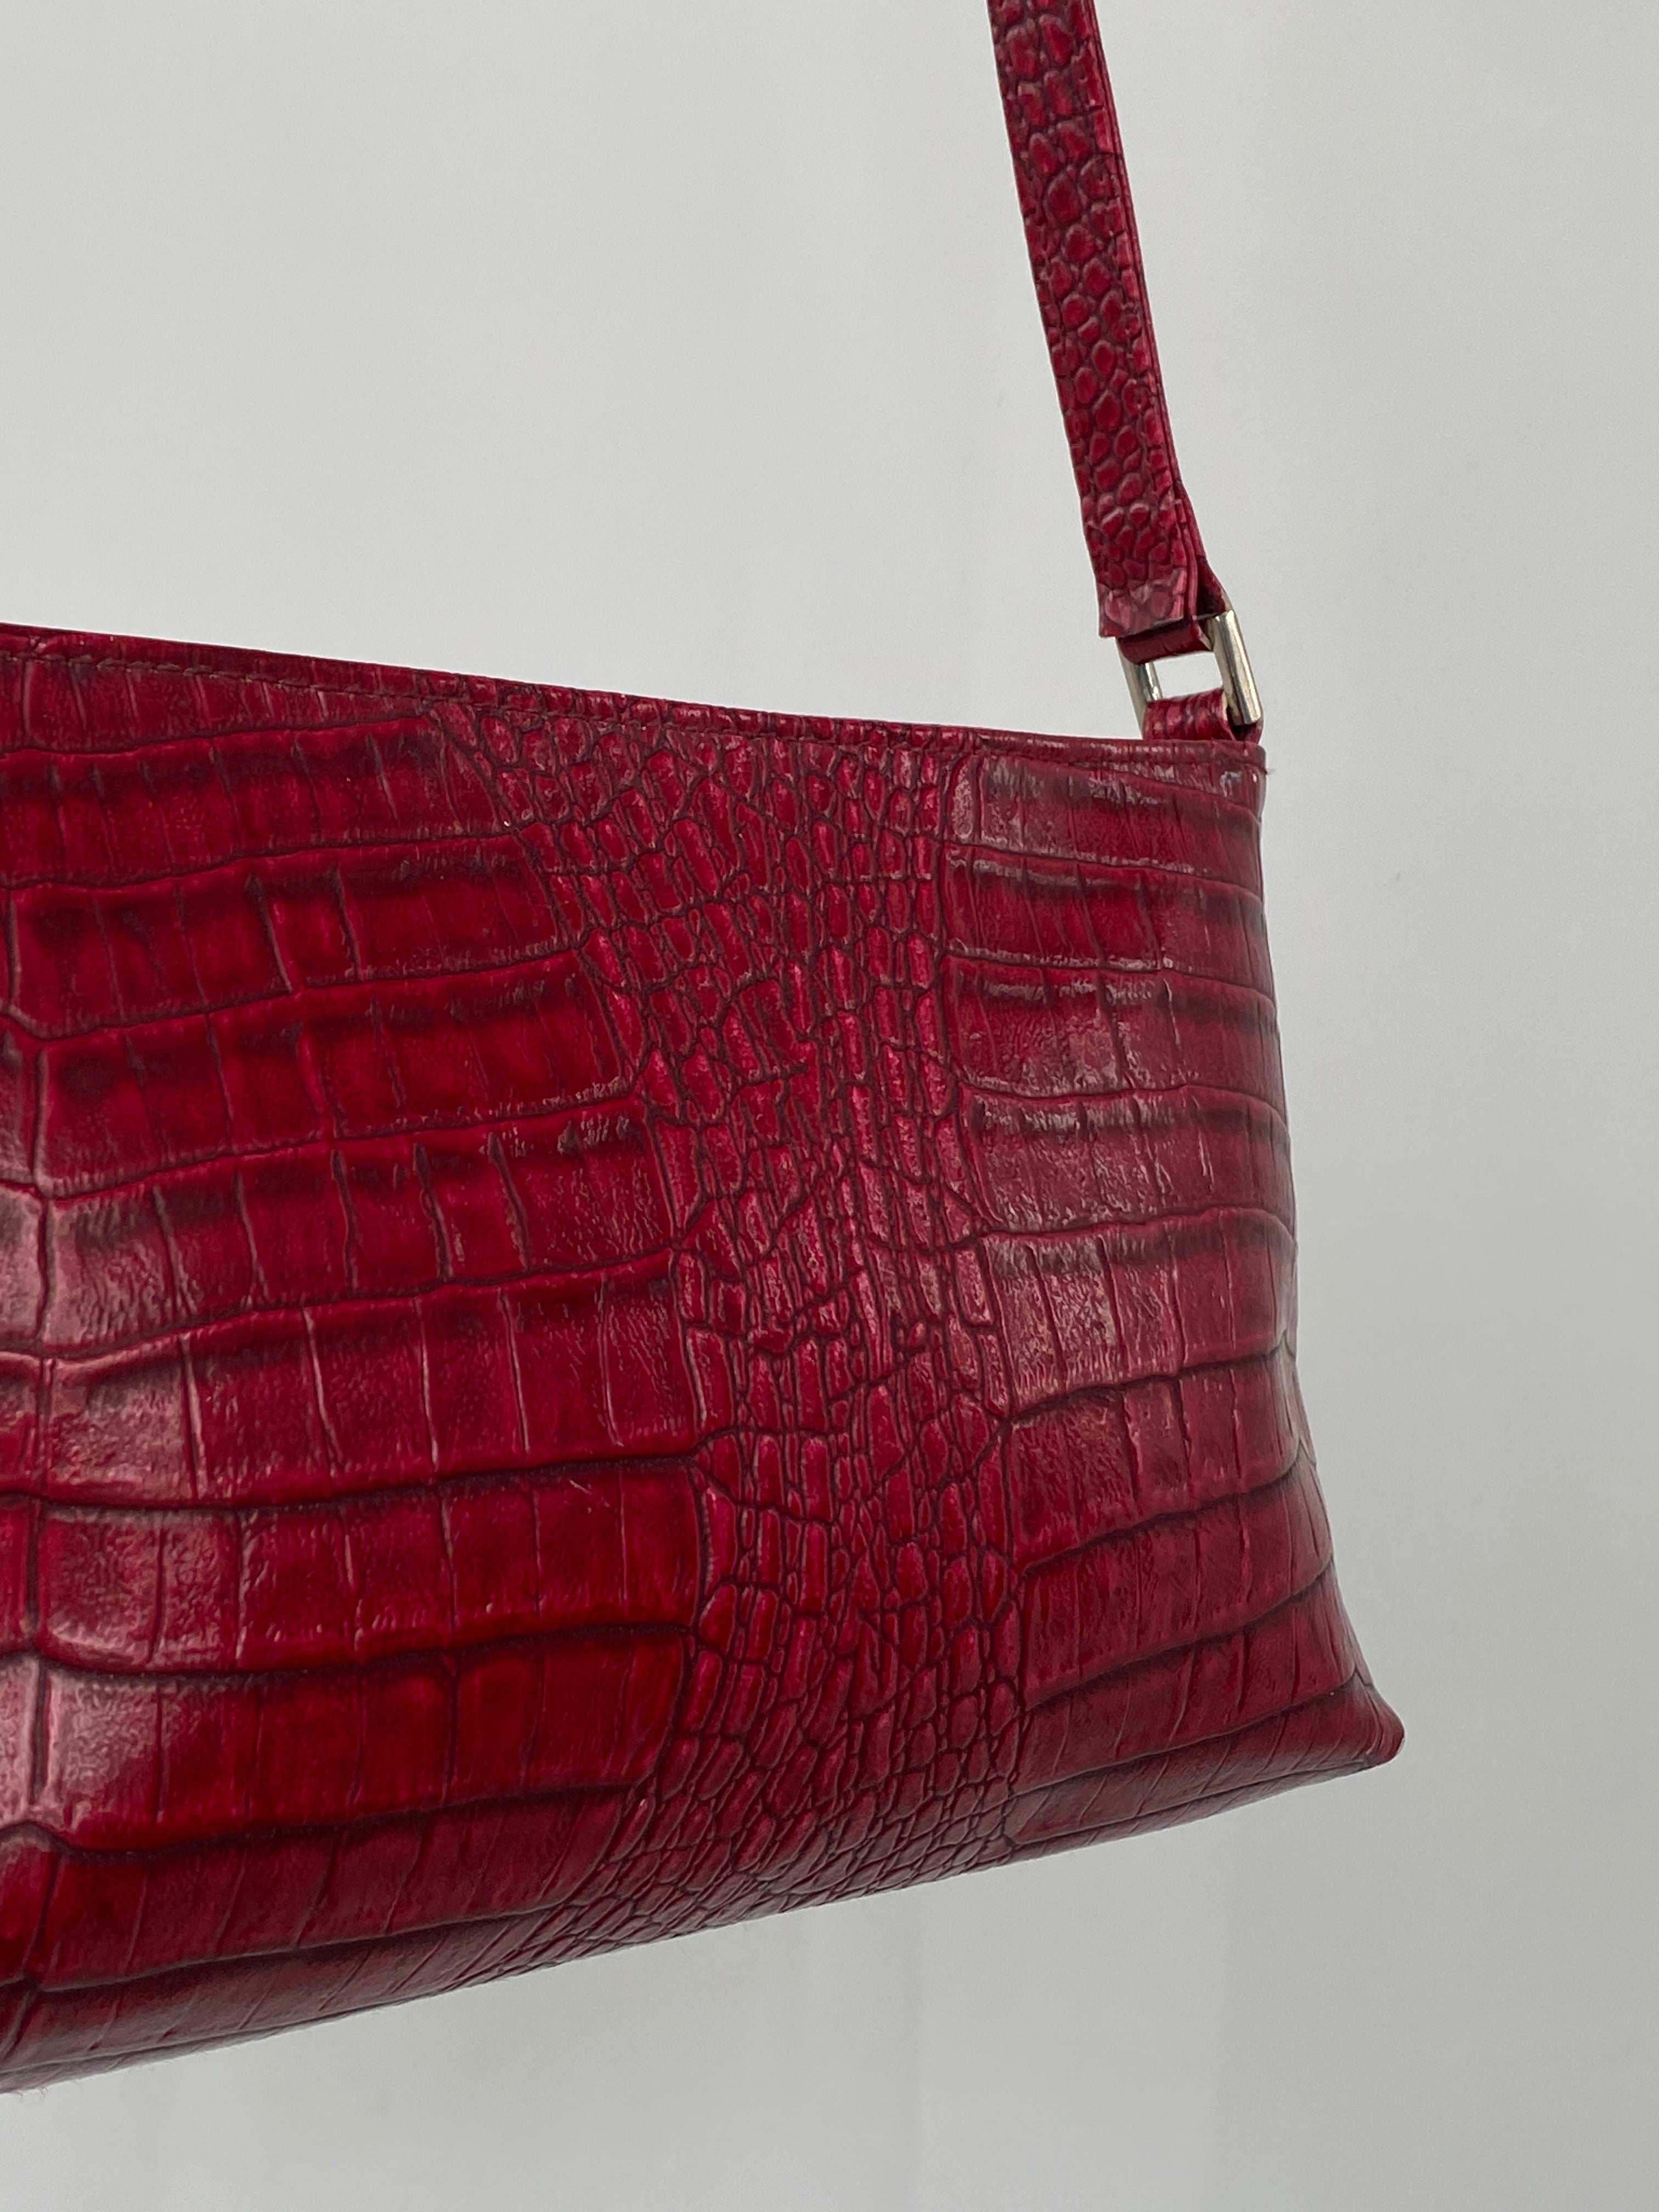 90s Barratts Red Leather Shoulder Bag - Balagan Vintage Shoulder Bag 00s, bag, handbag, red leather